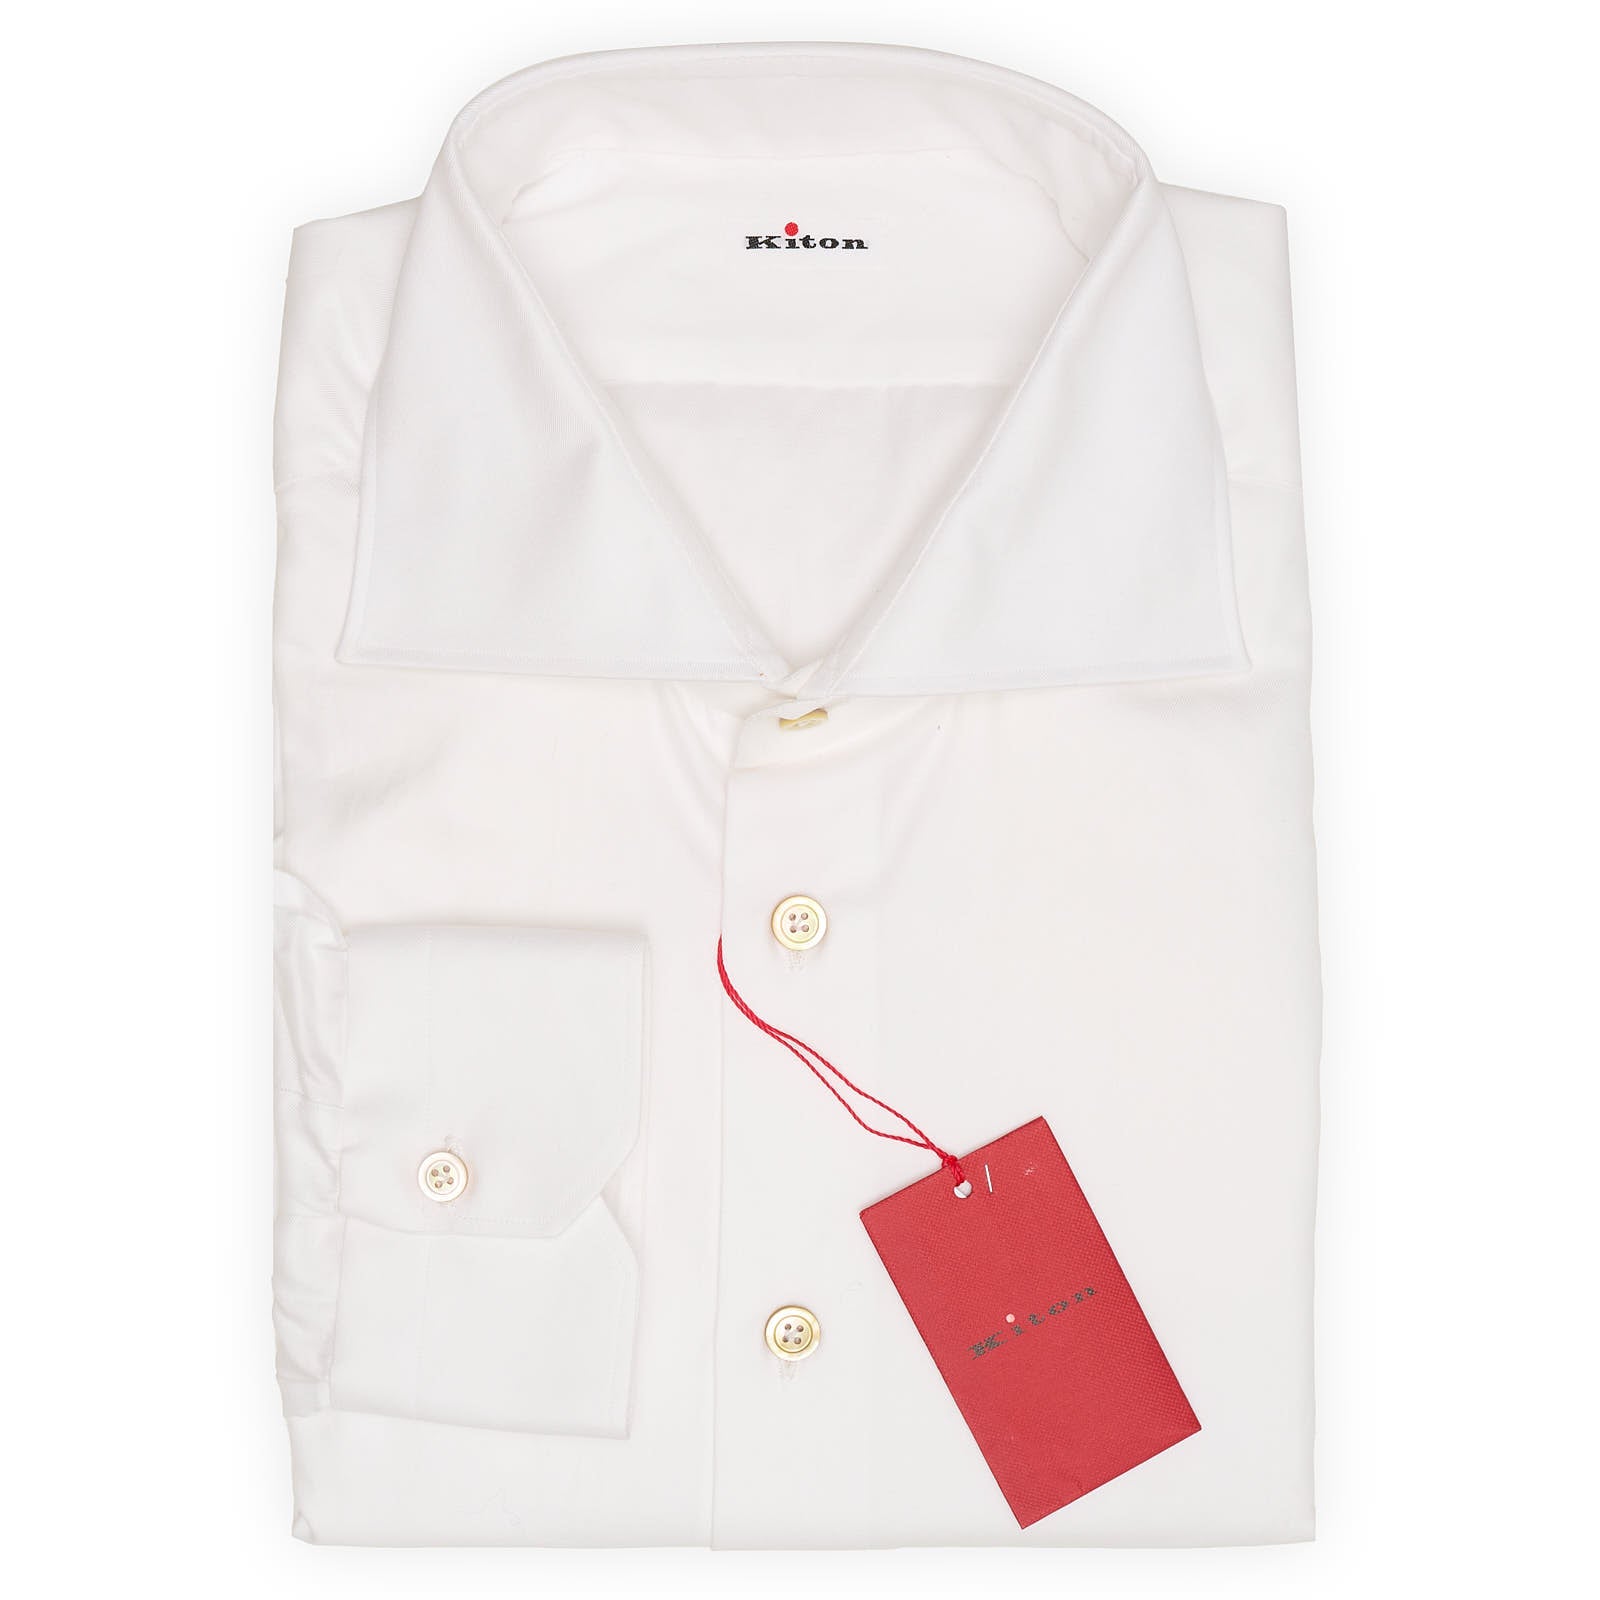 KITON Napoli Handmade White Twill Cotton Dress Shirt EU 45 NEW US 18